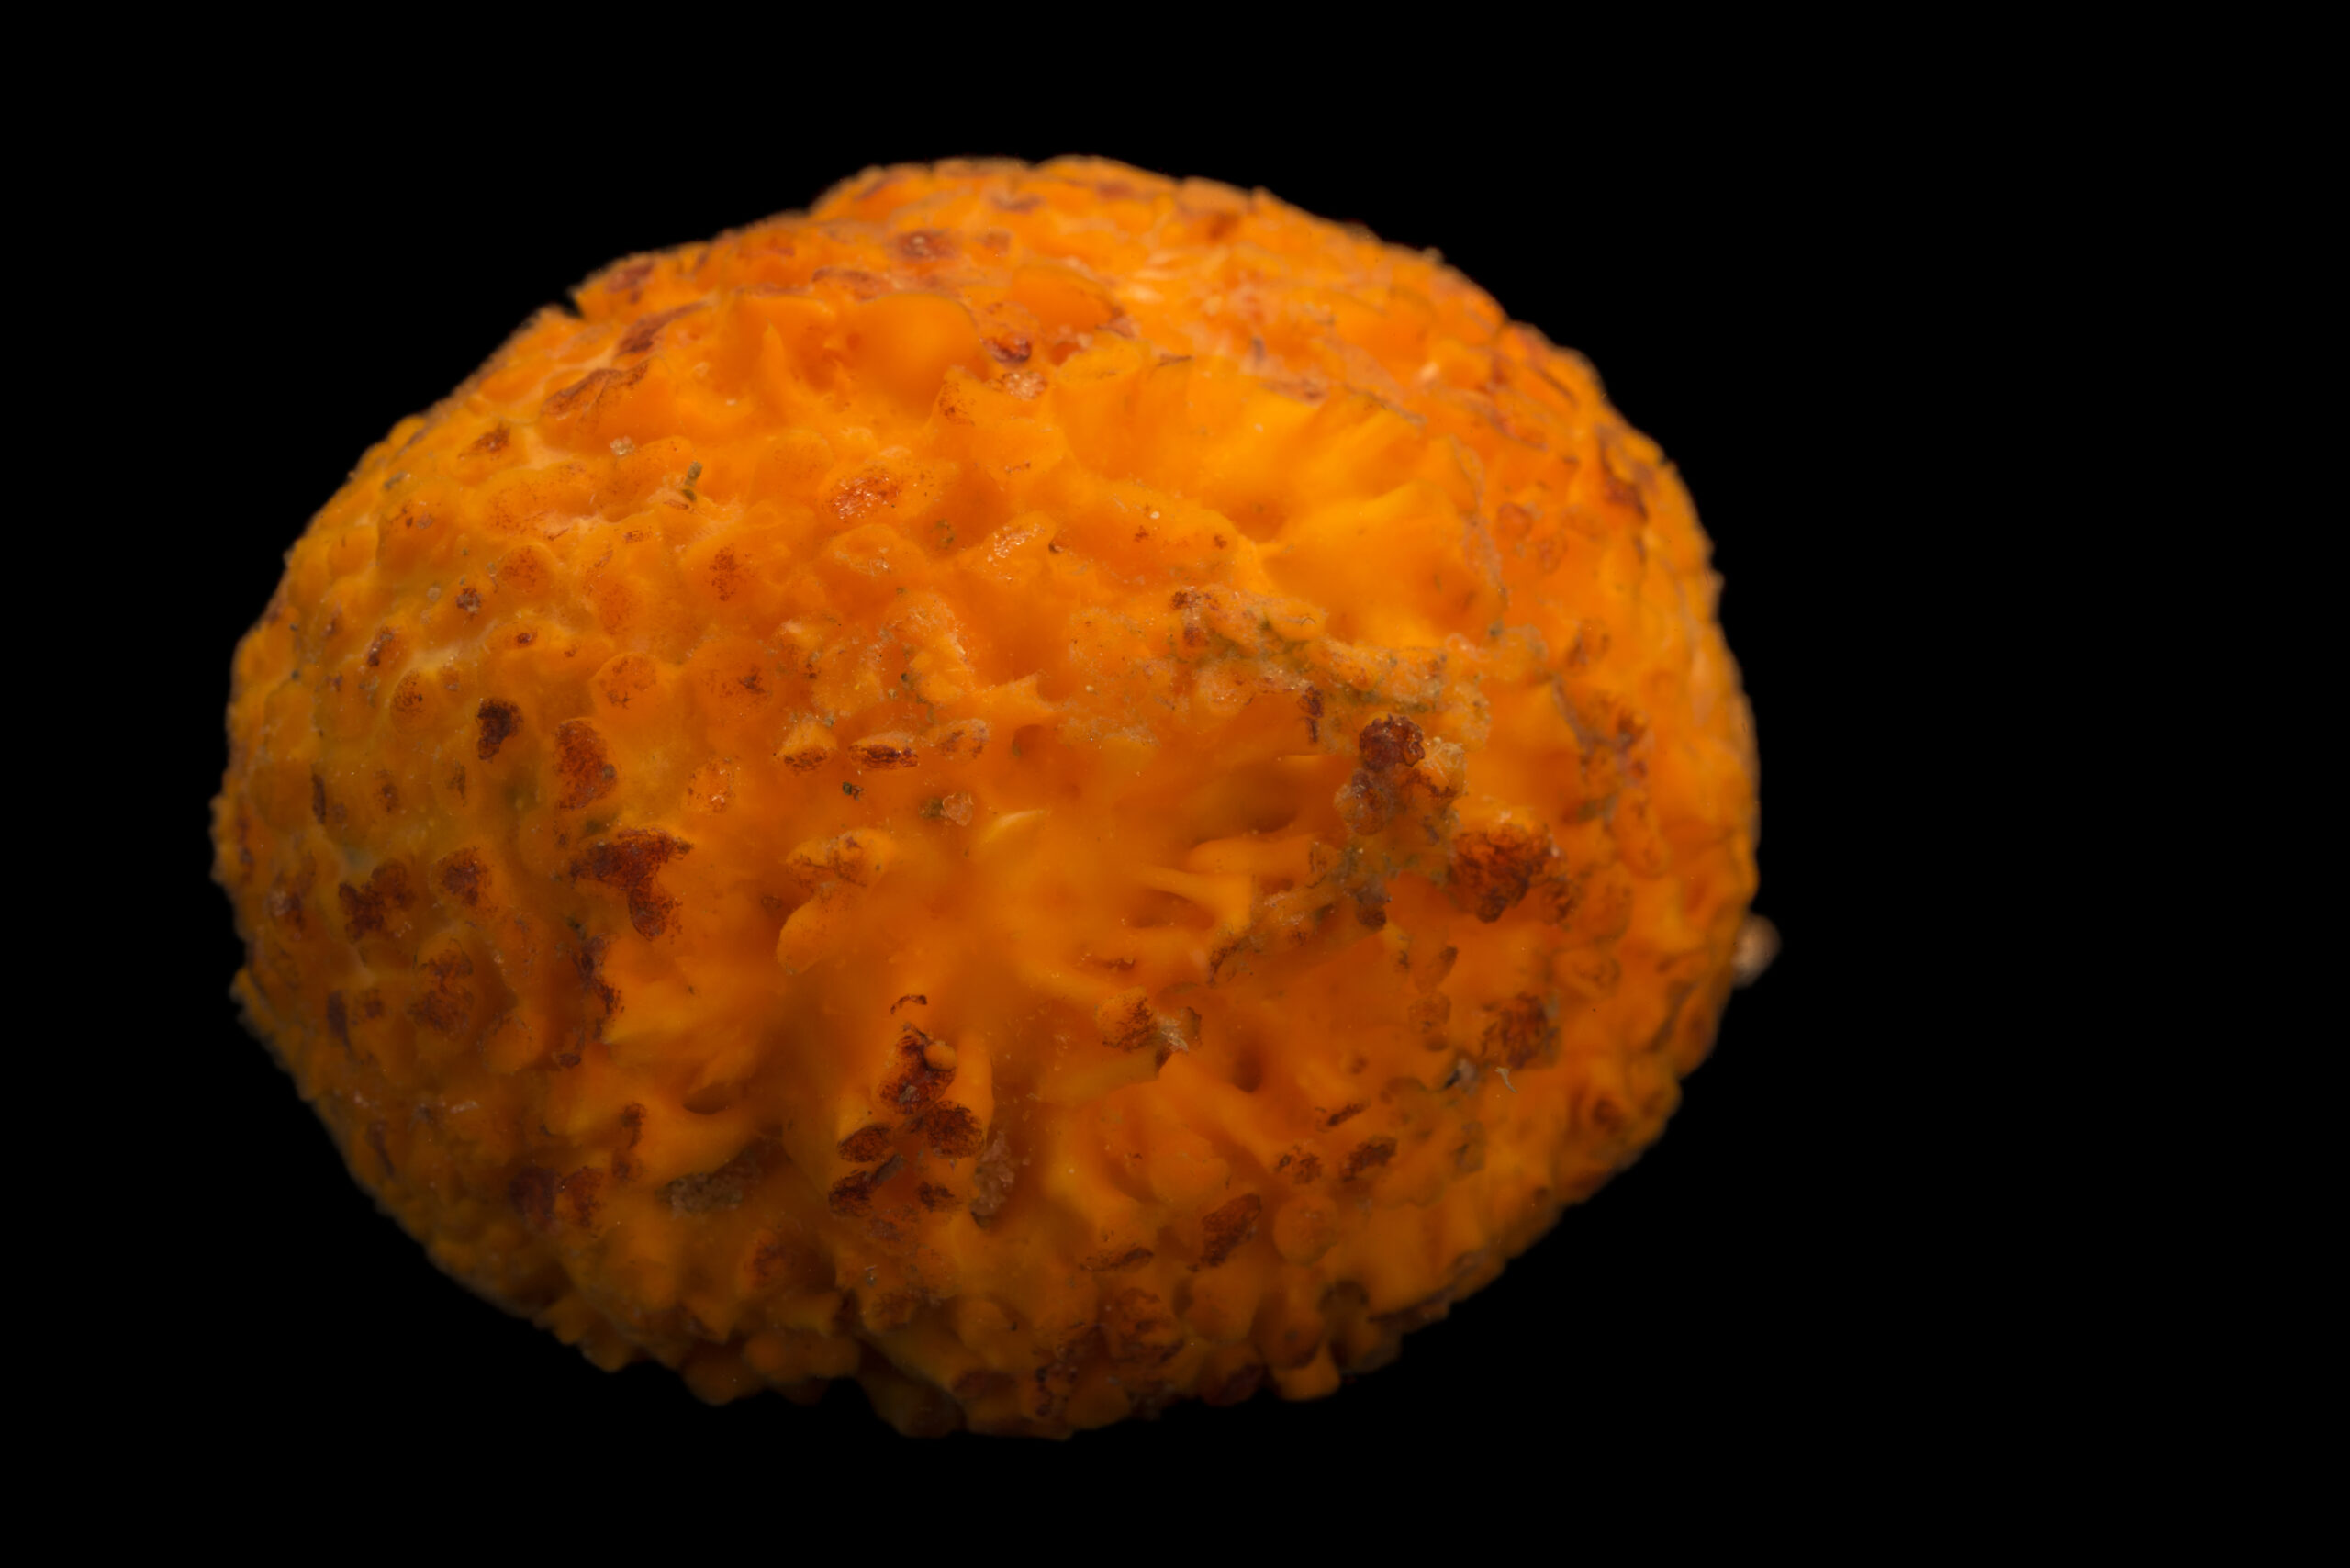 Tethya aurantium, the golf ball sponge, or orange puffball sponge, at Gulf Specimen Marine Lab and Aquarium.